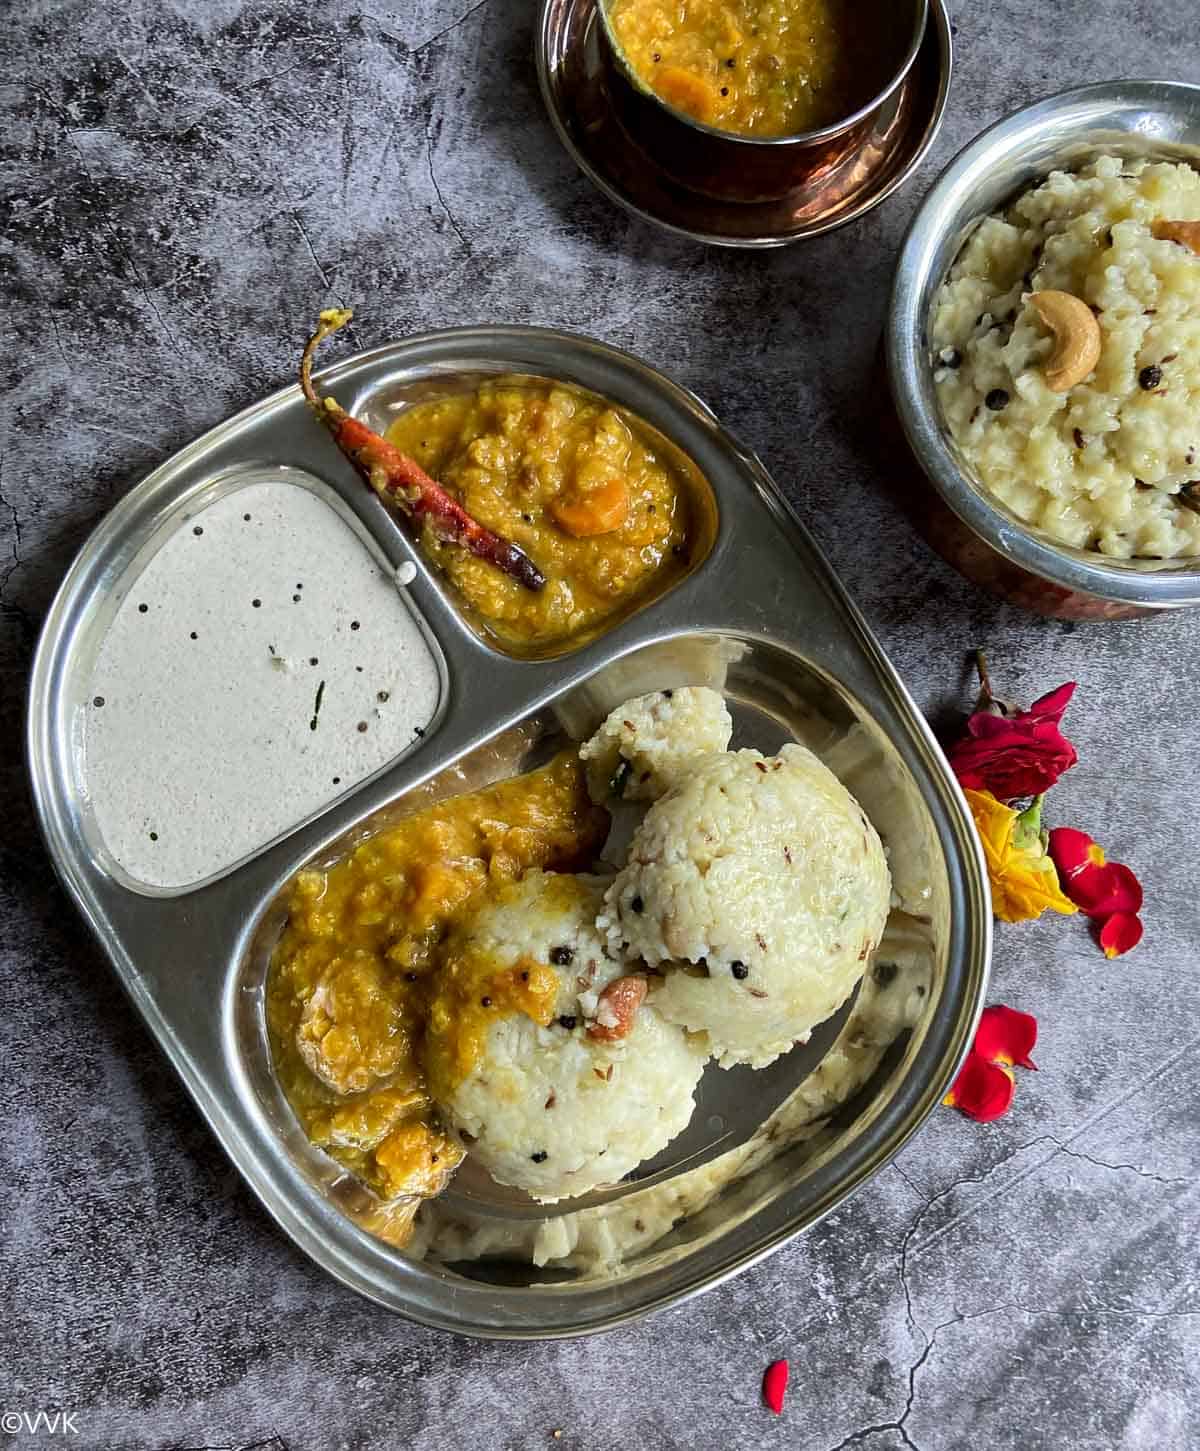 pongal served with chutney and sambar